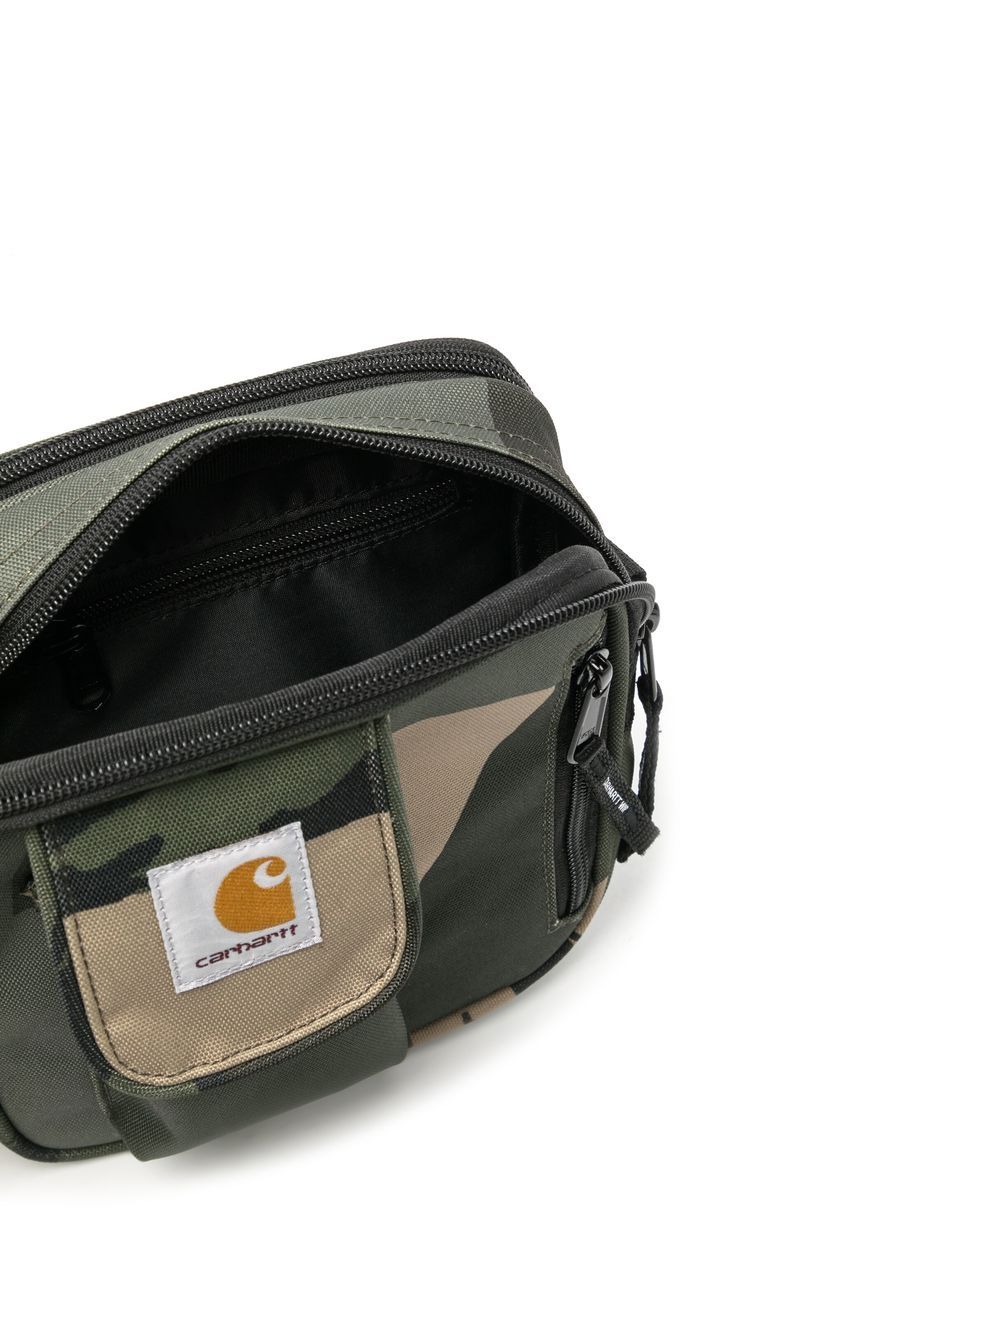 Carhartt WIP Essentials Bag - Camo Laurel